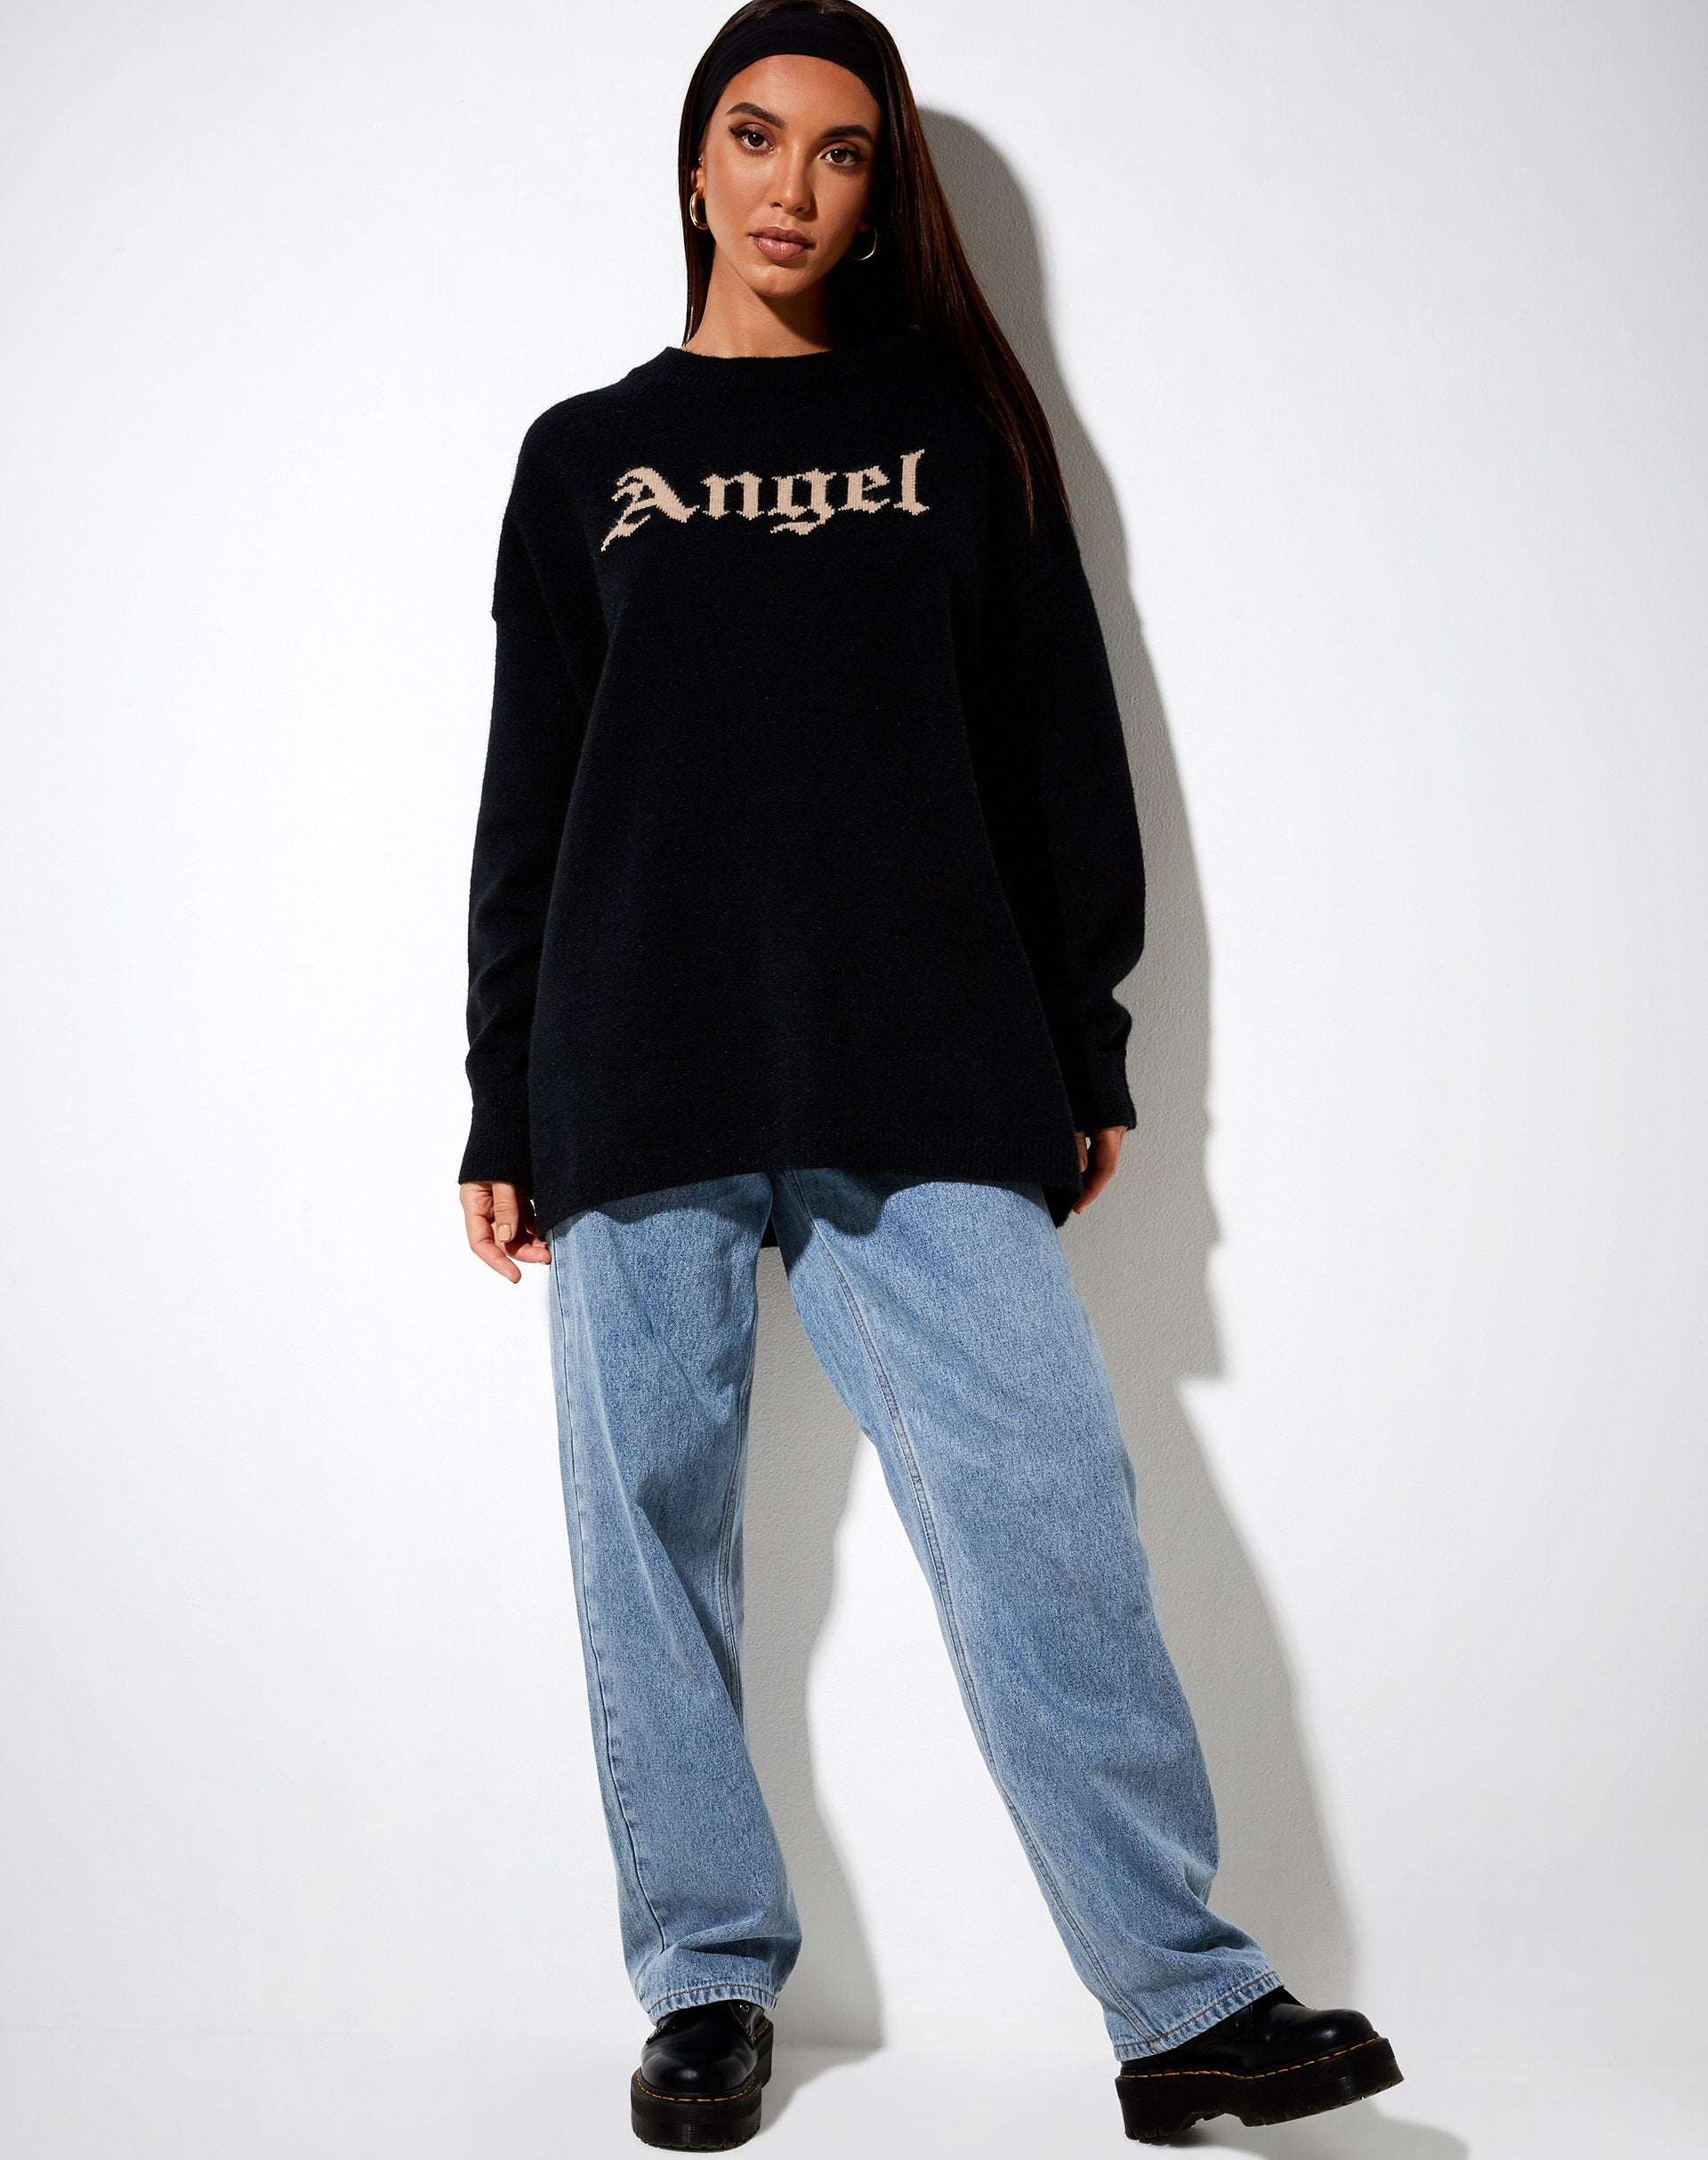 Image of Lulees Jumper in Knit Black with Angel in Cream